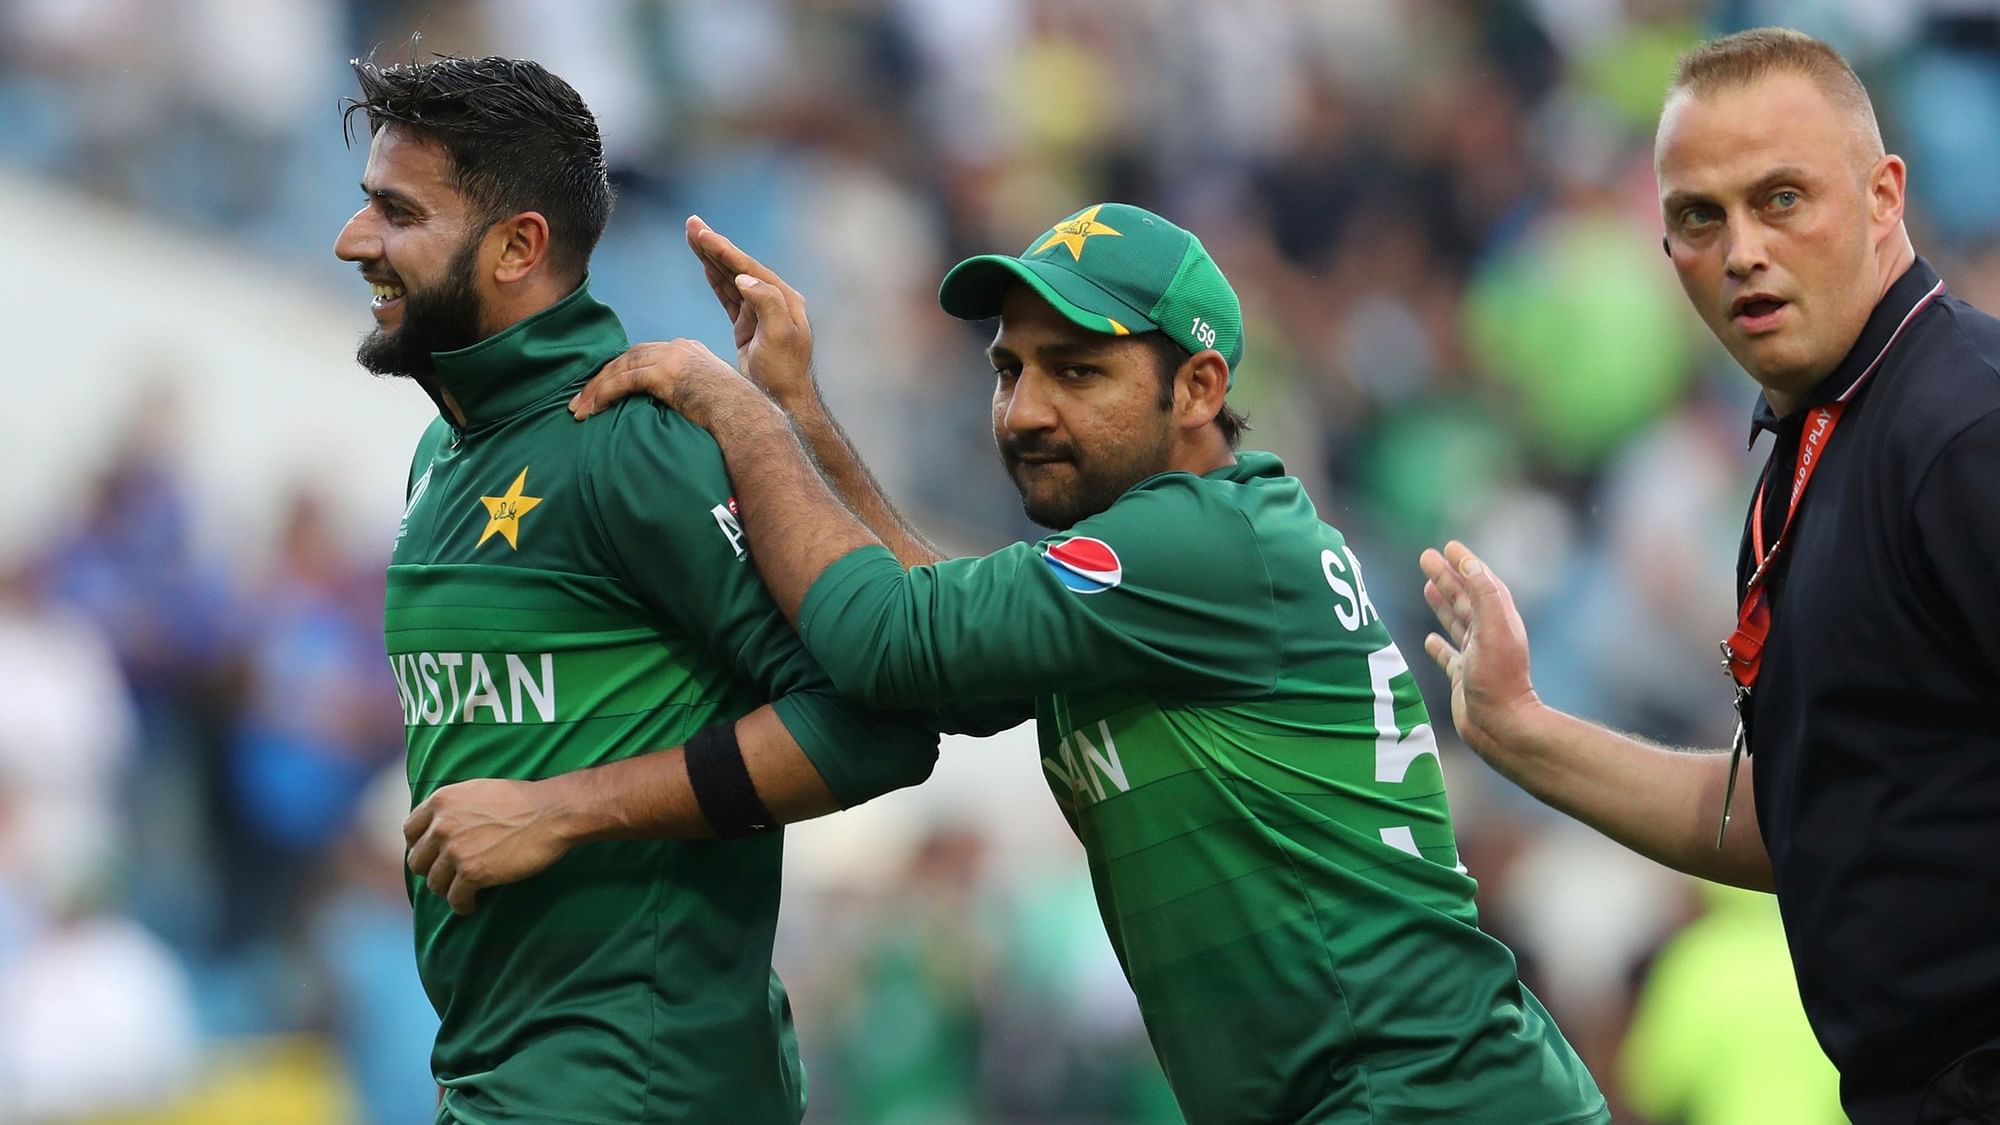 Imad Wasim scored an unbeaten 49 to help Pakistan win the game.